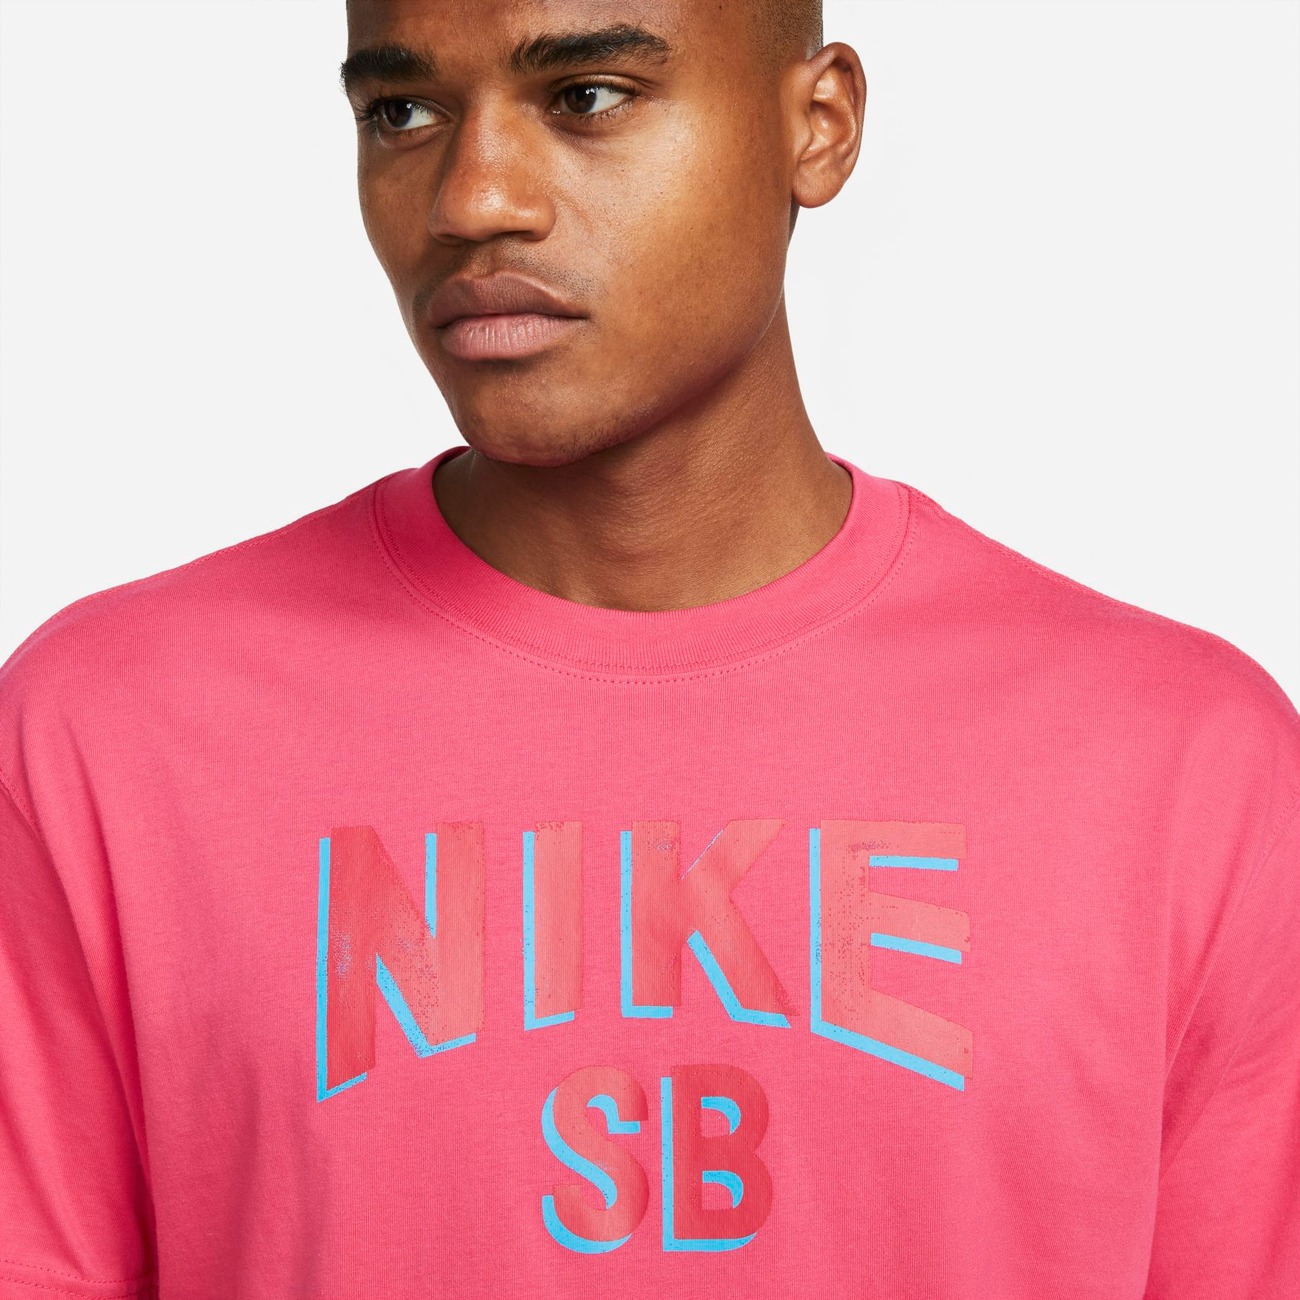 Camiseta Nike SB Masculina - Foto 3